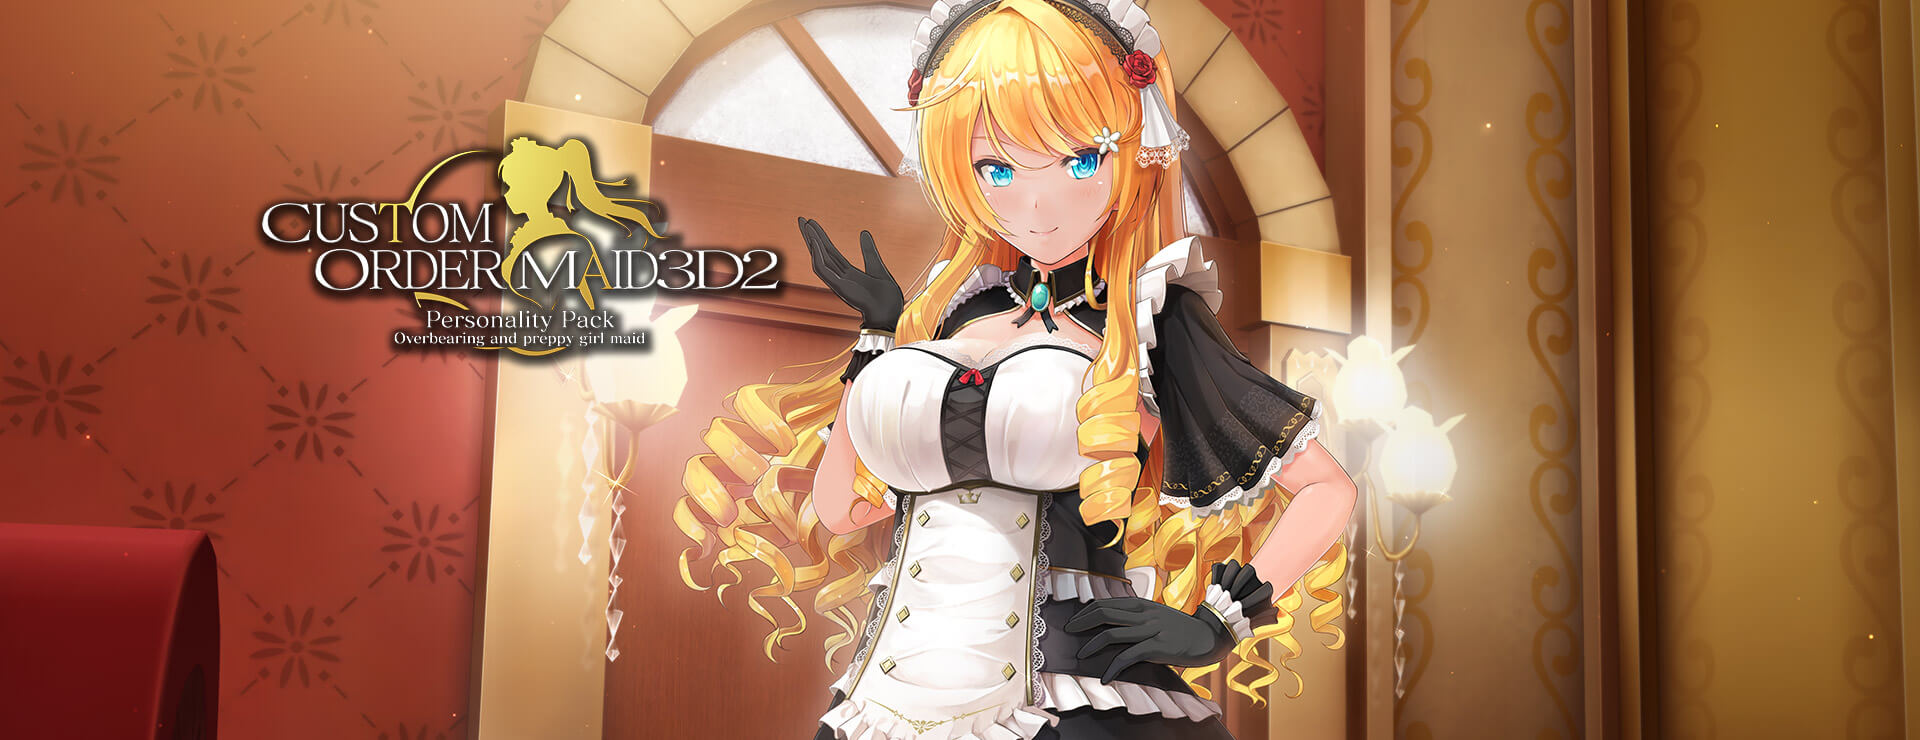 Custom Order Maid 3D2: Overbearing and Preppy Girl Maid DLC - シミュレーション ゲーム